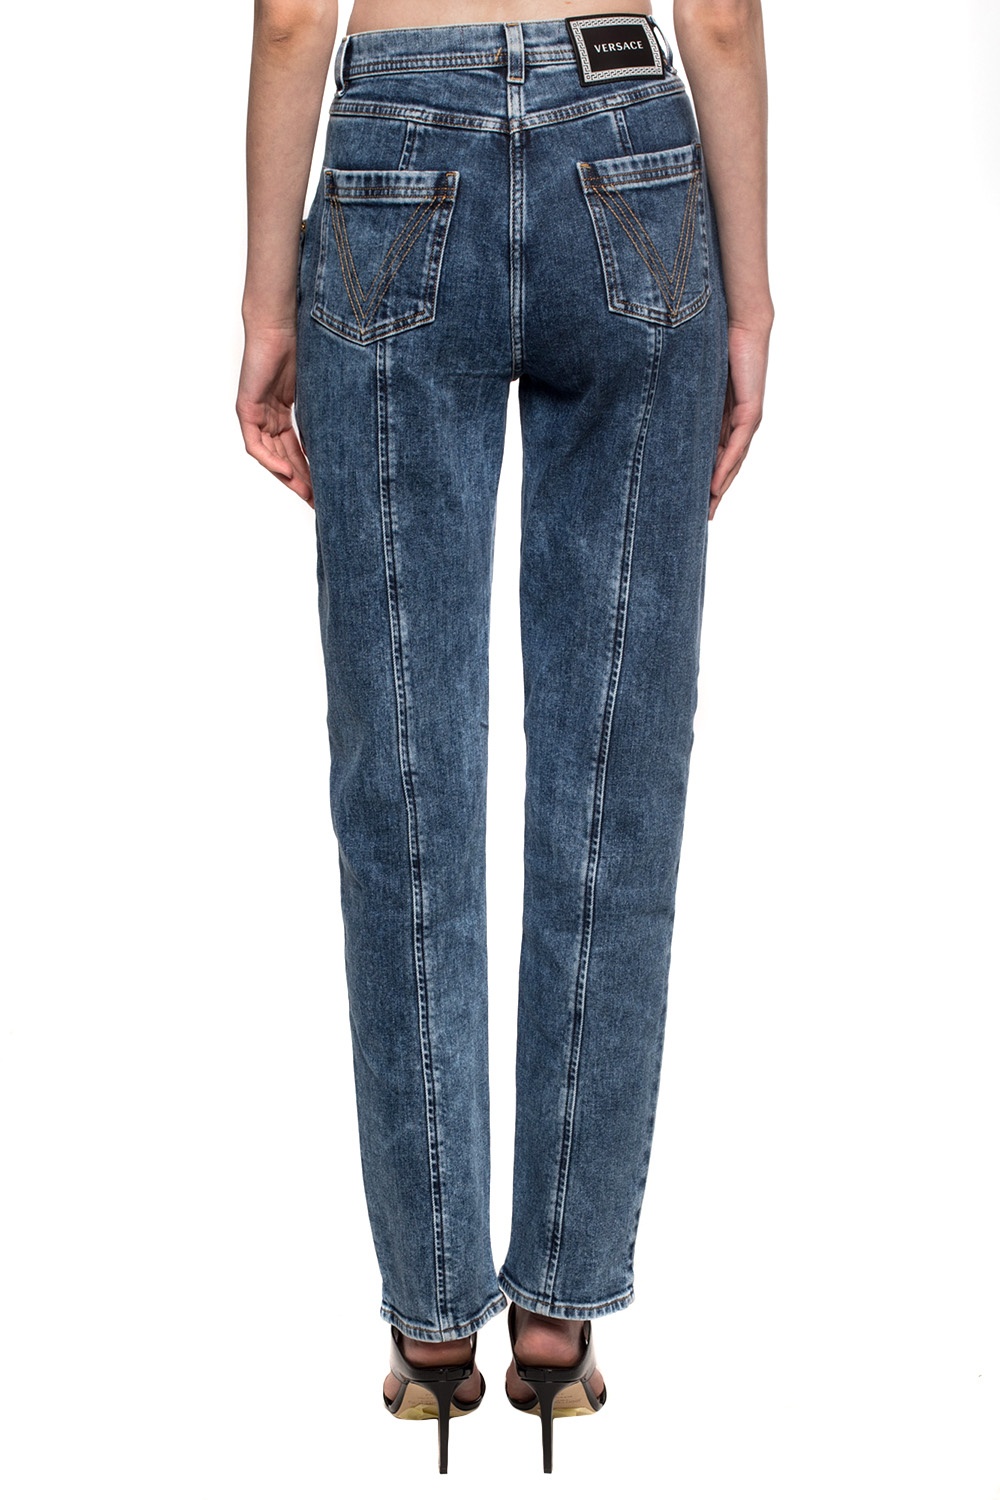 versace high waisted jeans